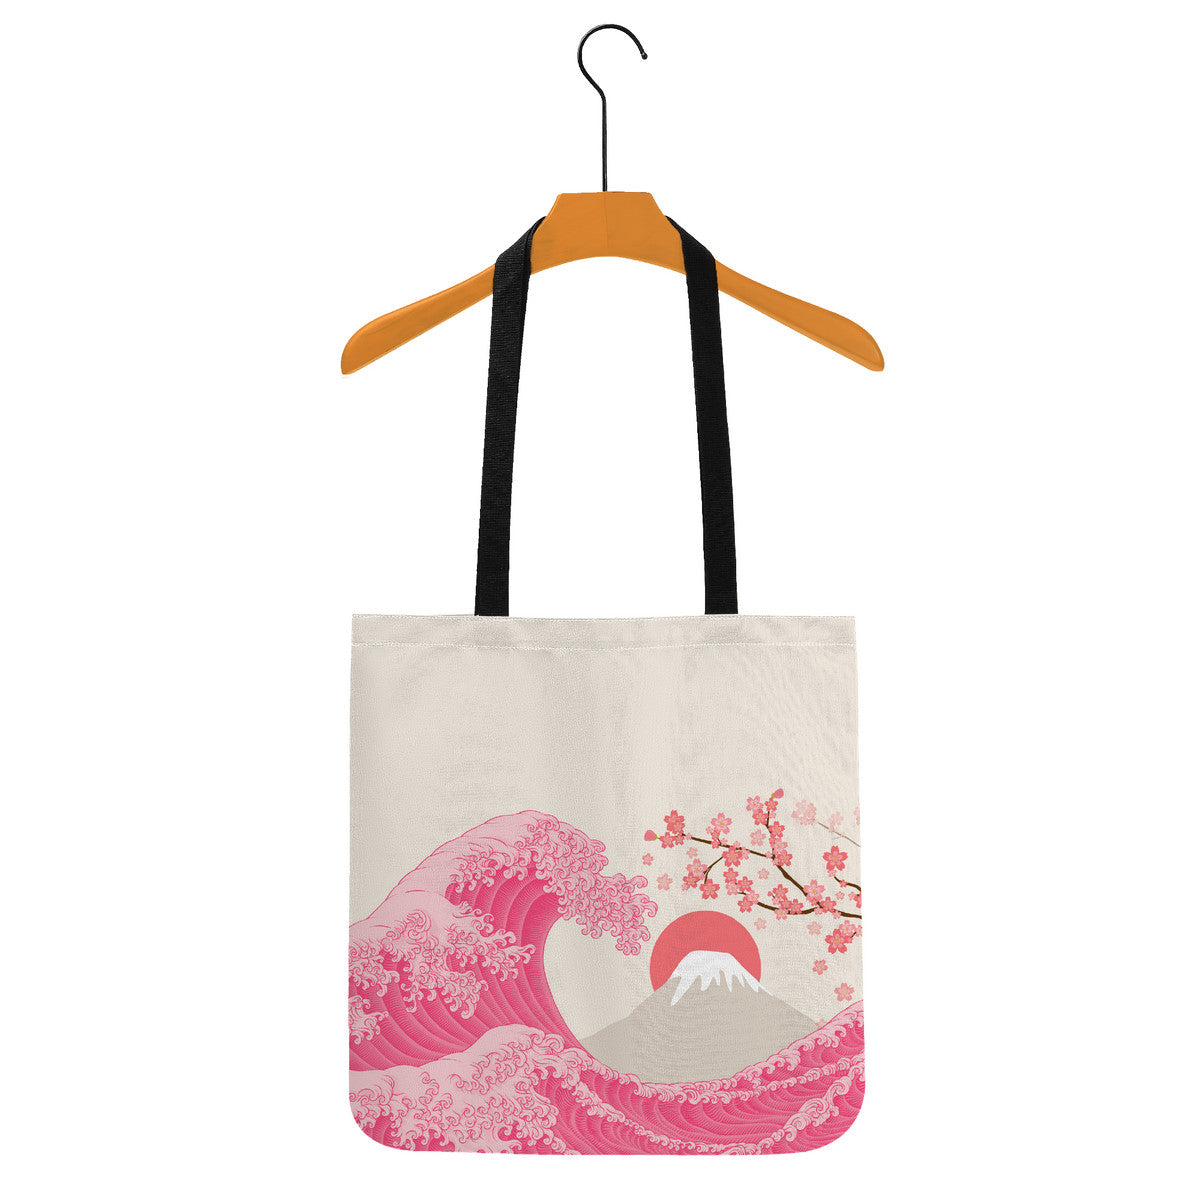 The Great Wave and Sakura Cloth Totes